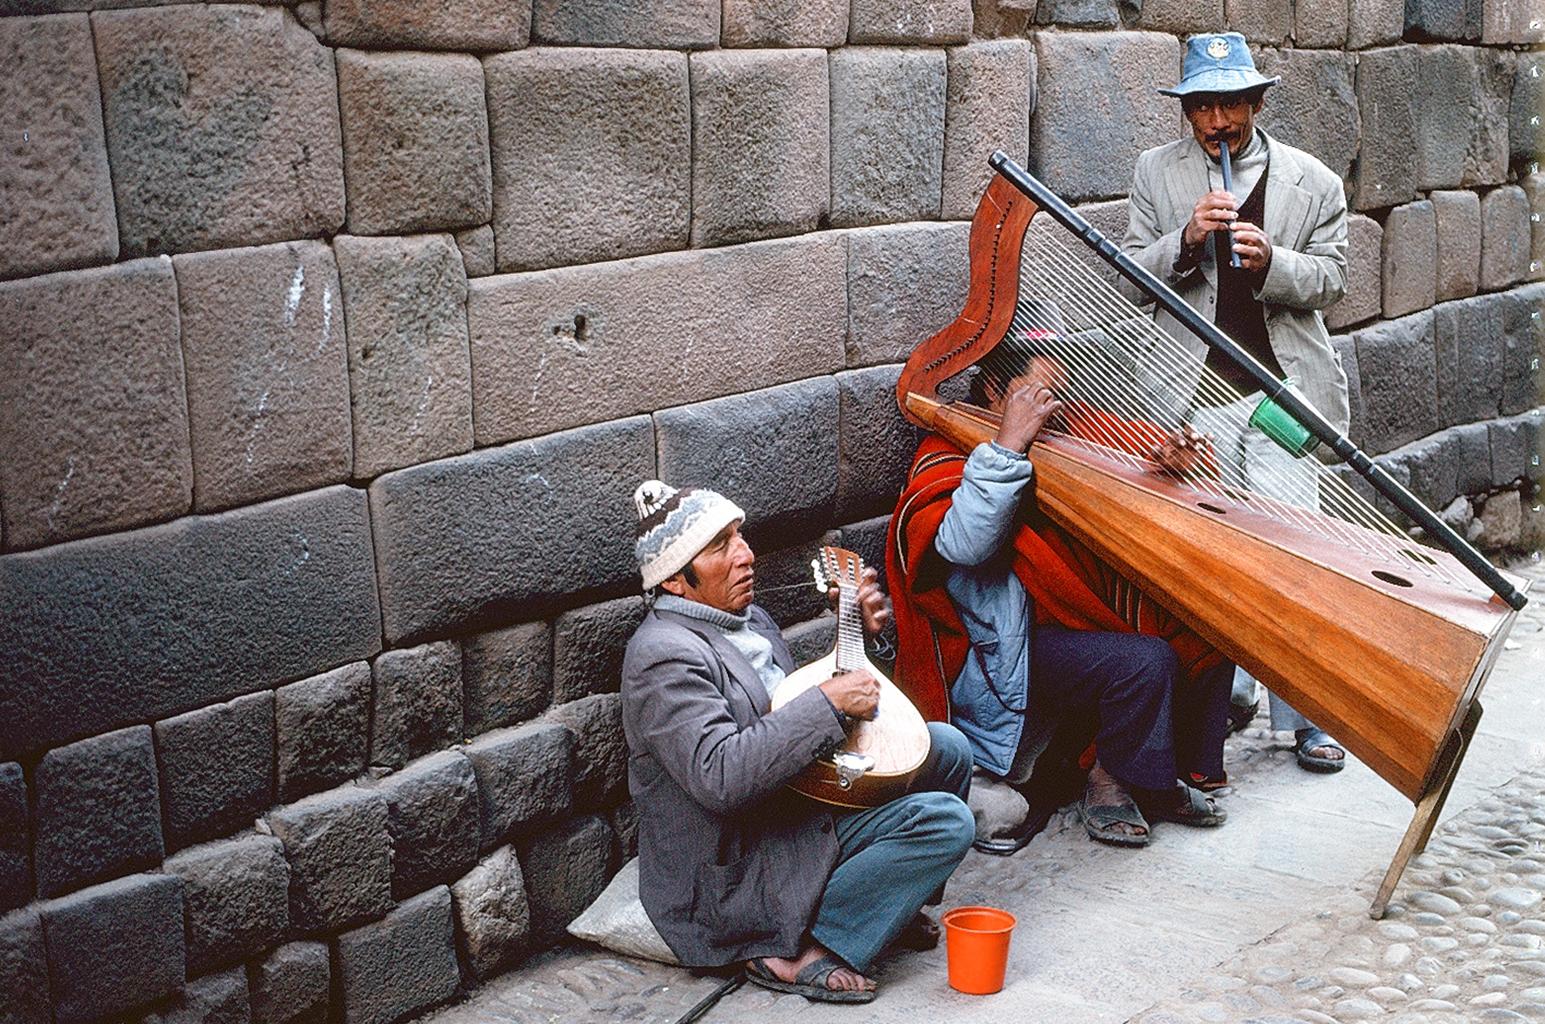 Street band, Cuzco 1989